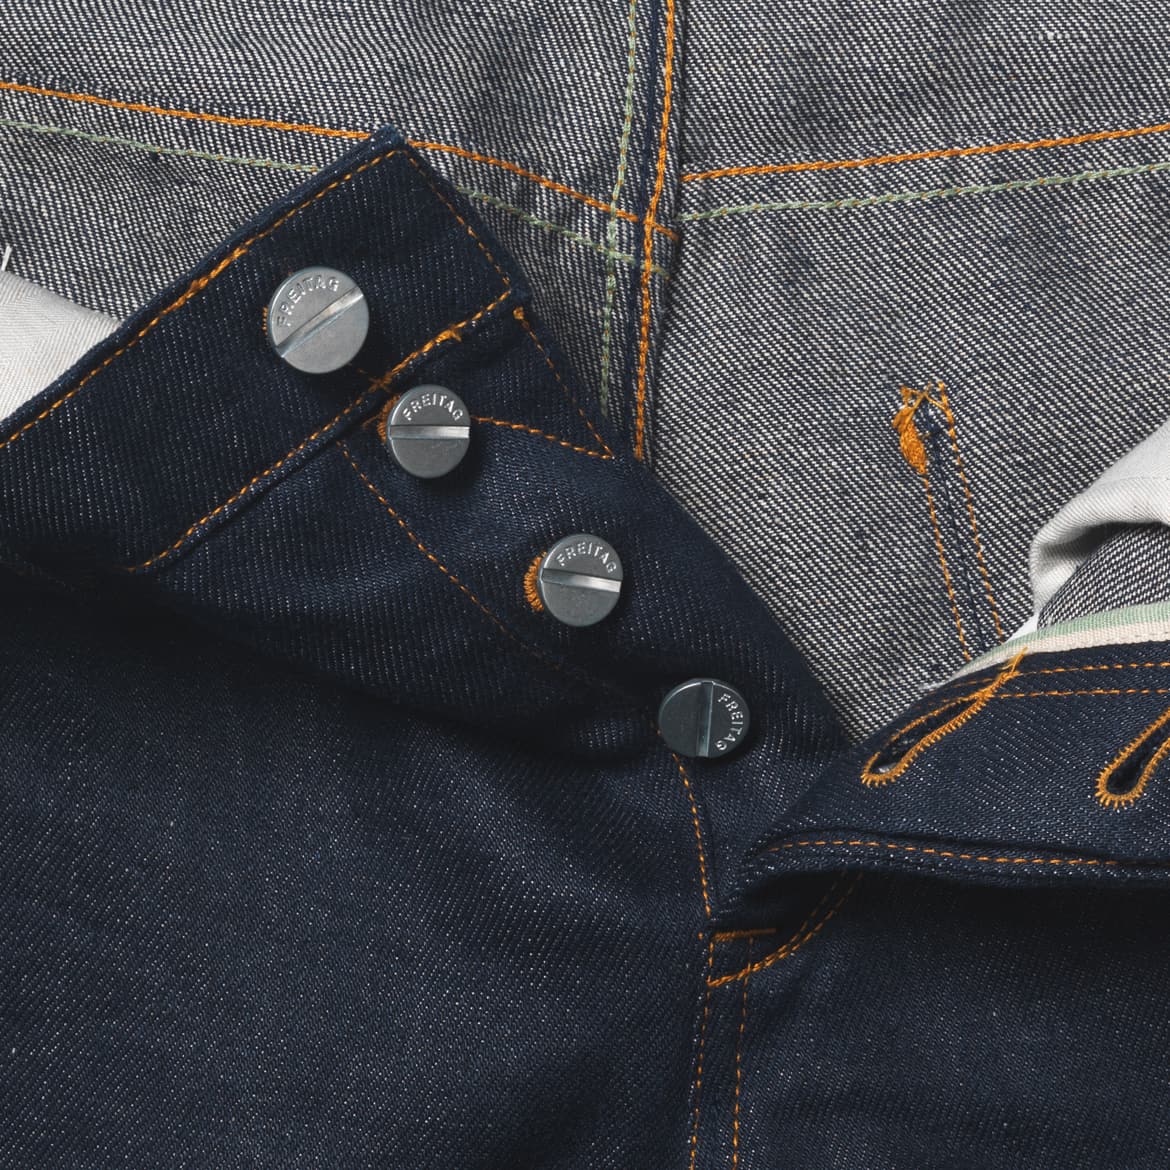 jeans-detail-1_0003.jpg